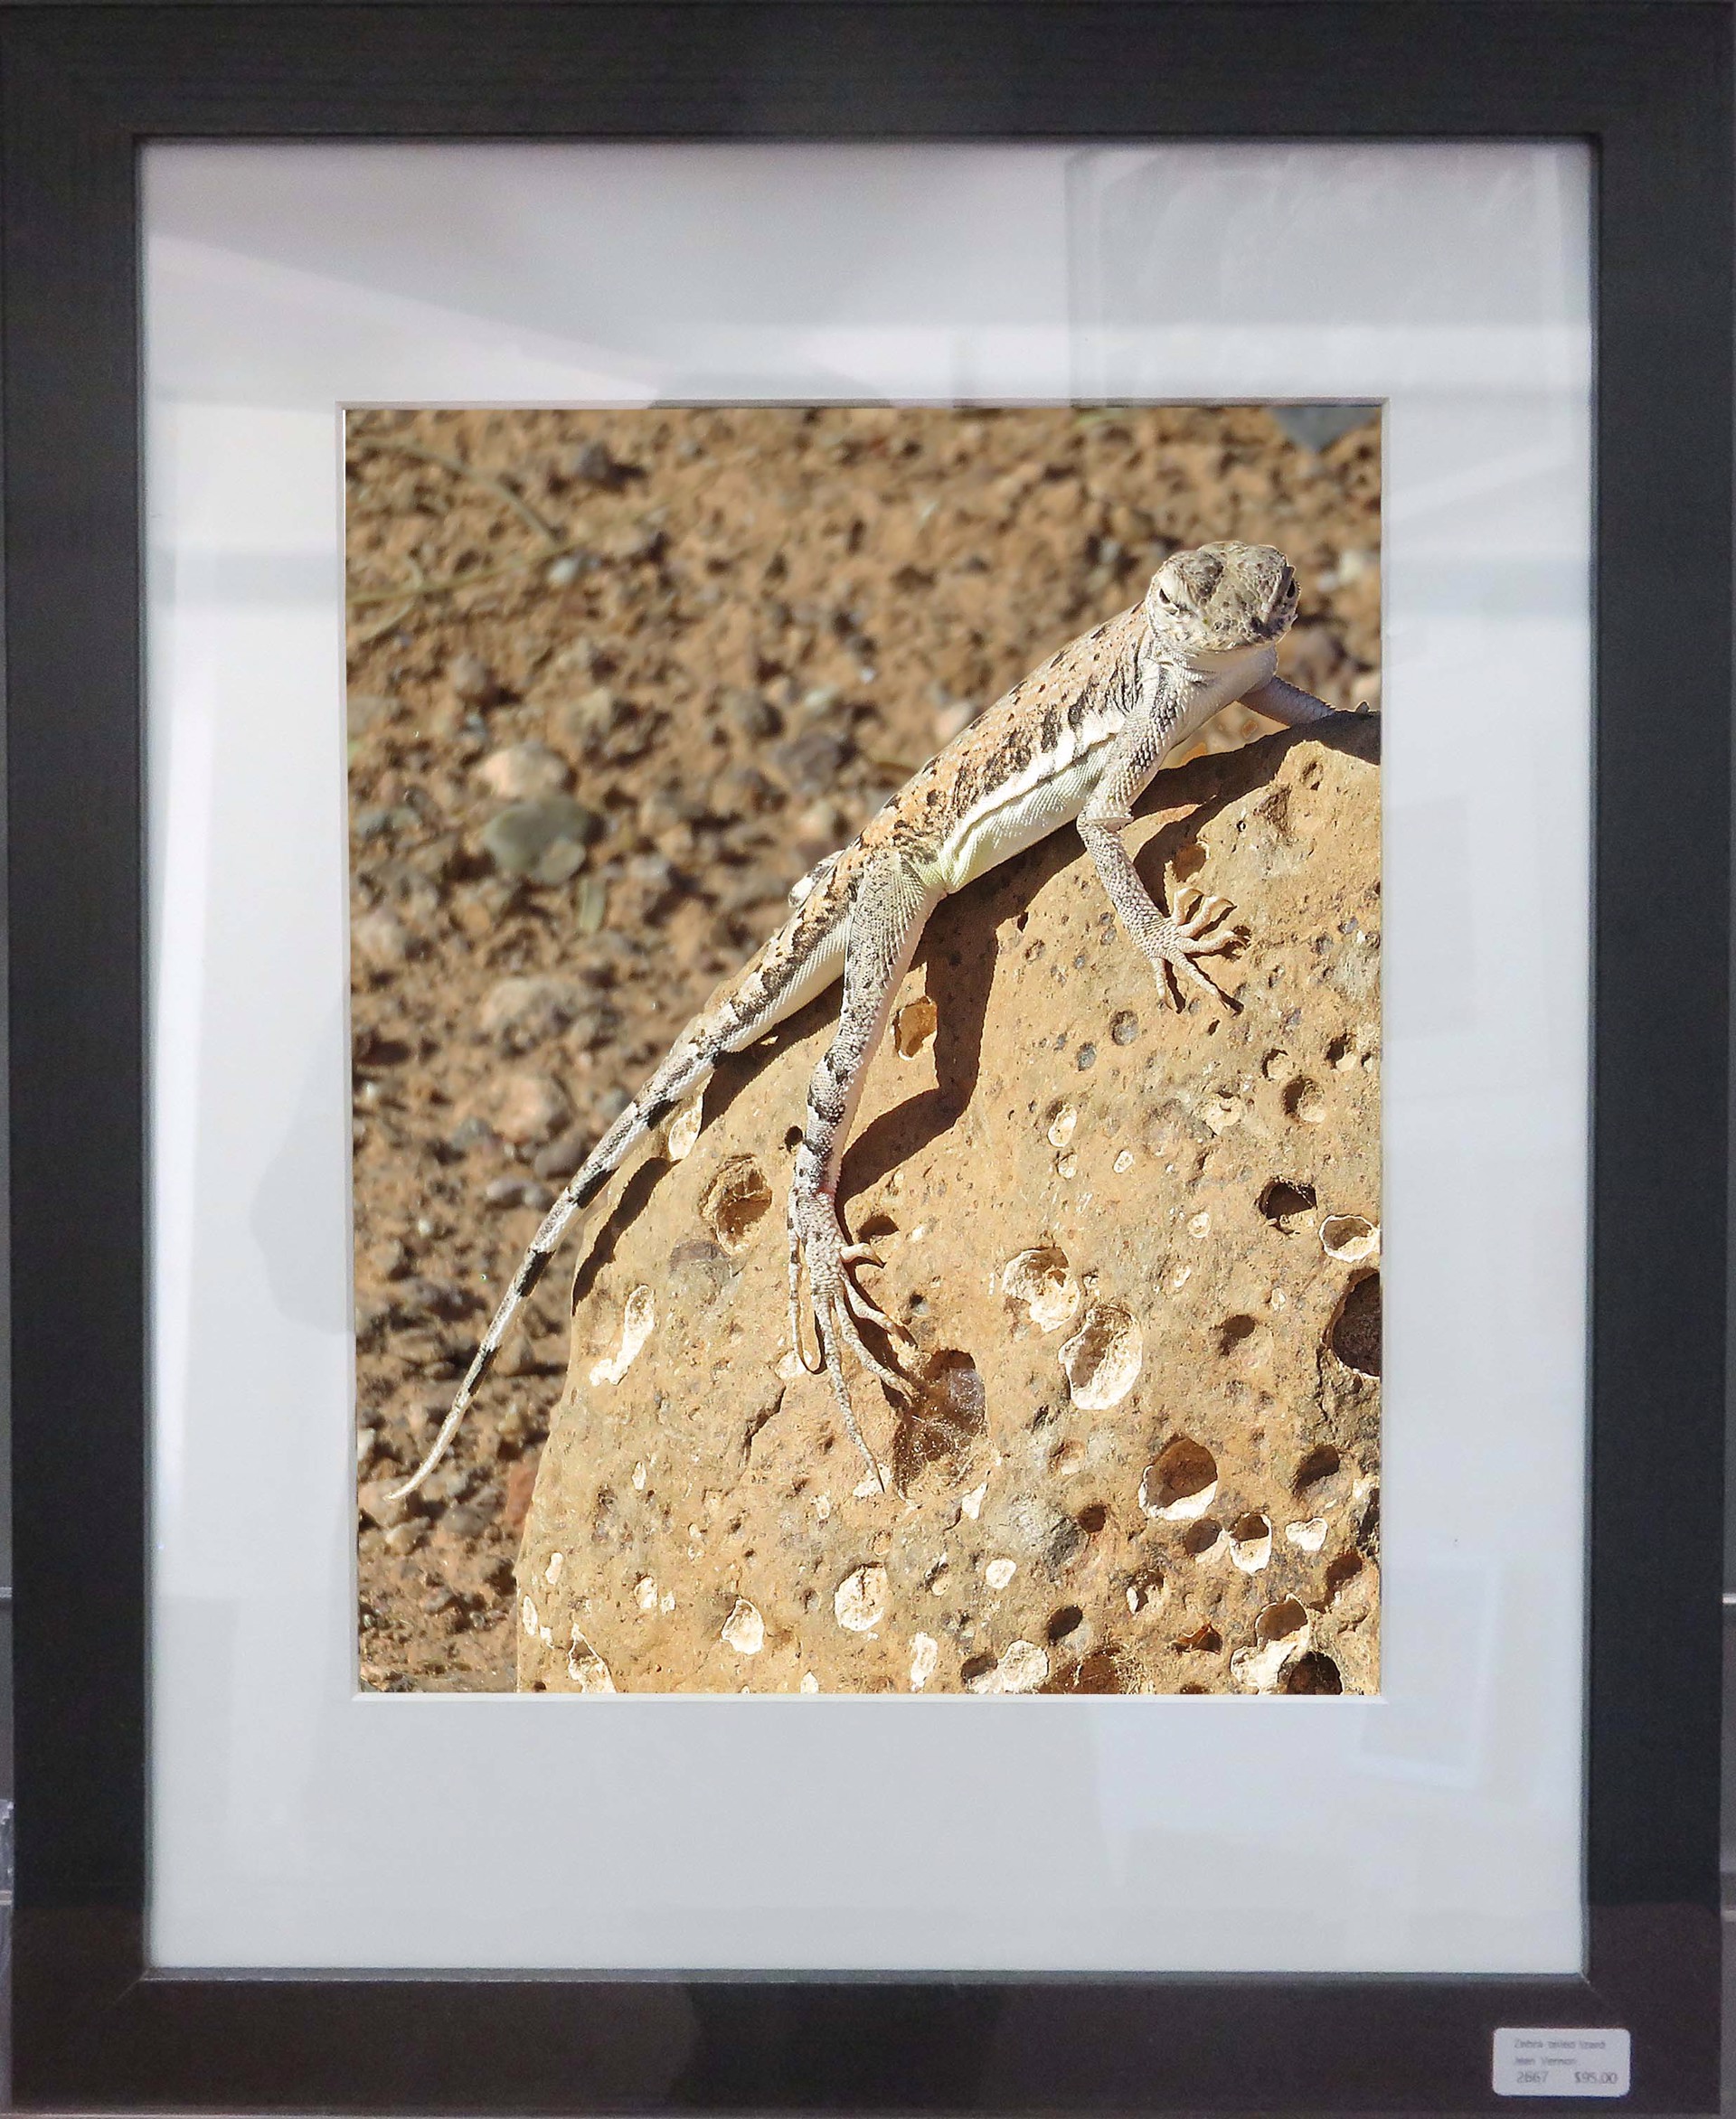 Zebra-tailed lizard by Jean Vernon